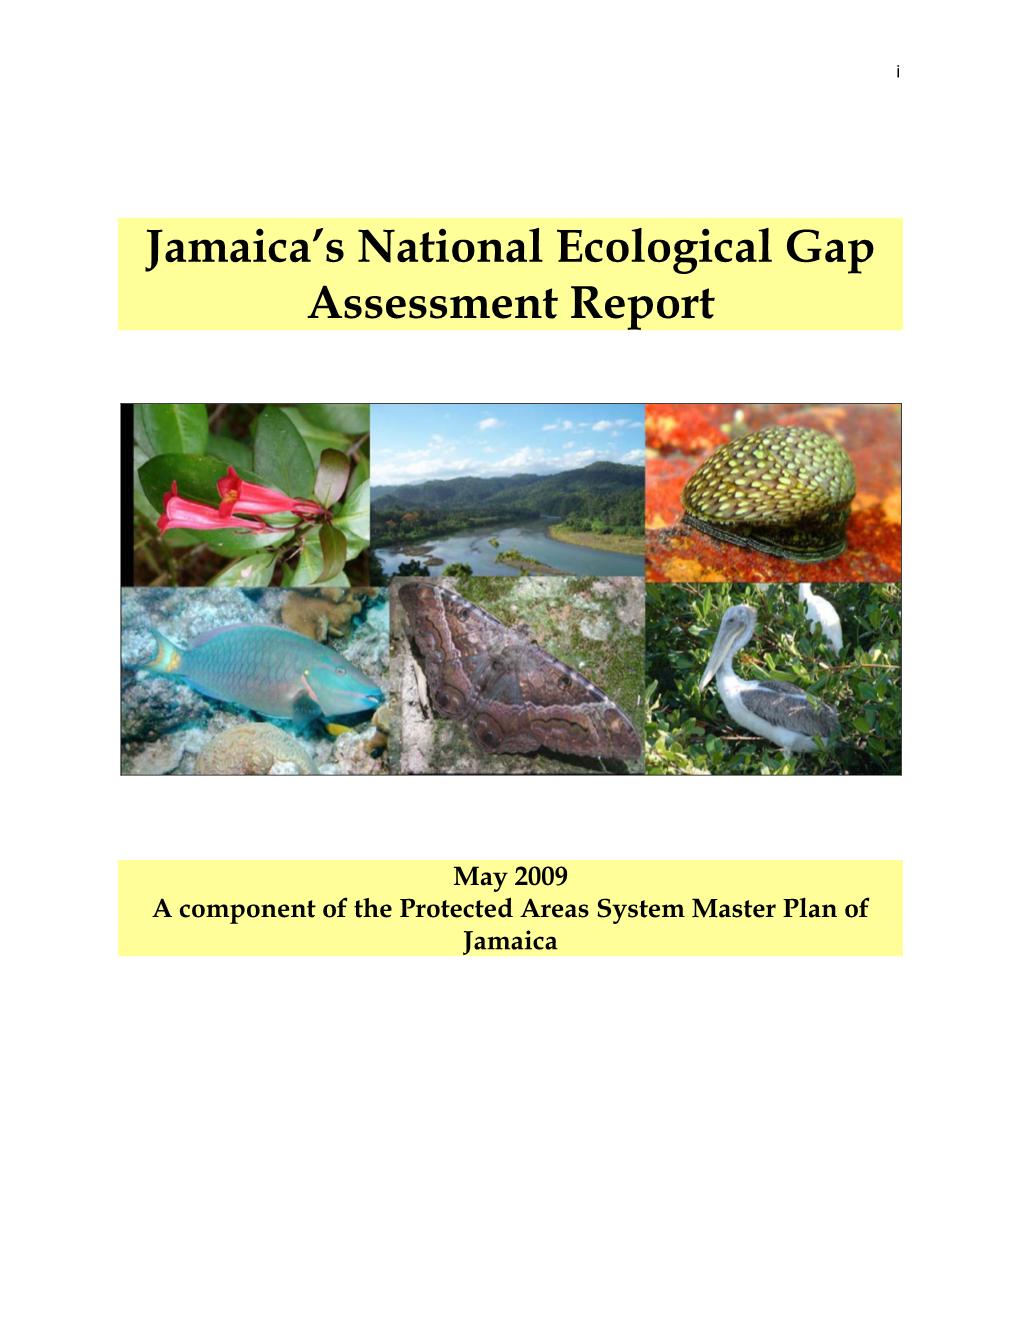 2009. Jamaica's National Ecological Gap Assessment Report. A